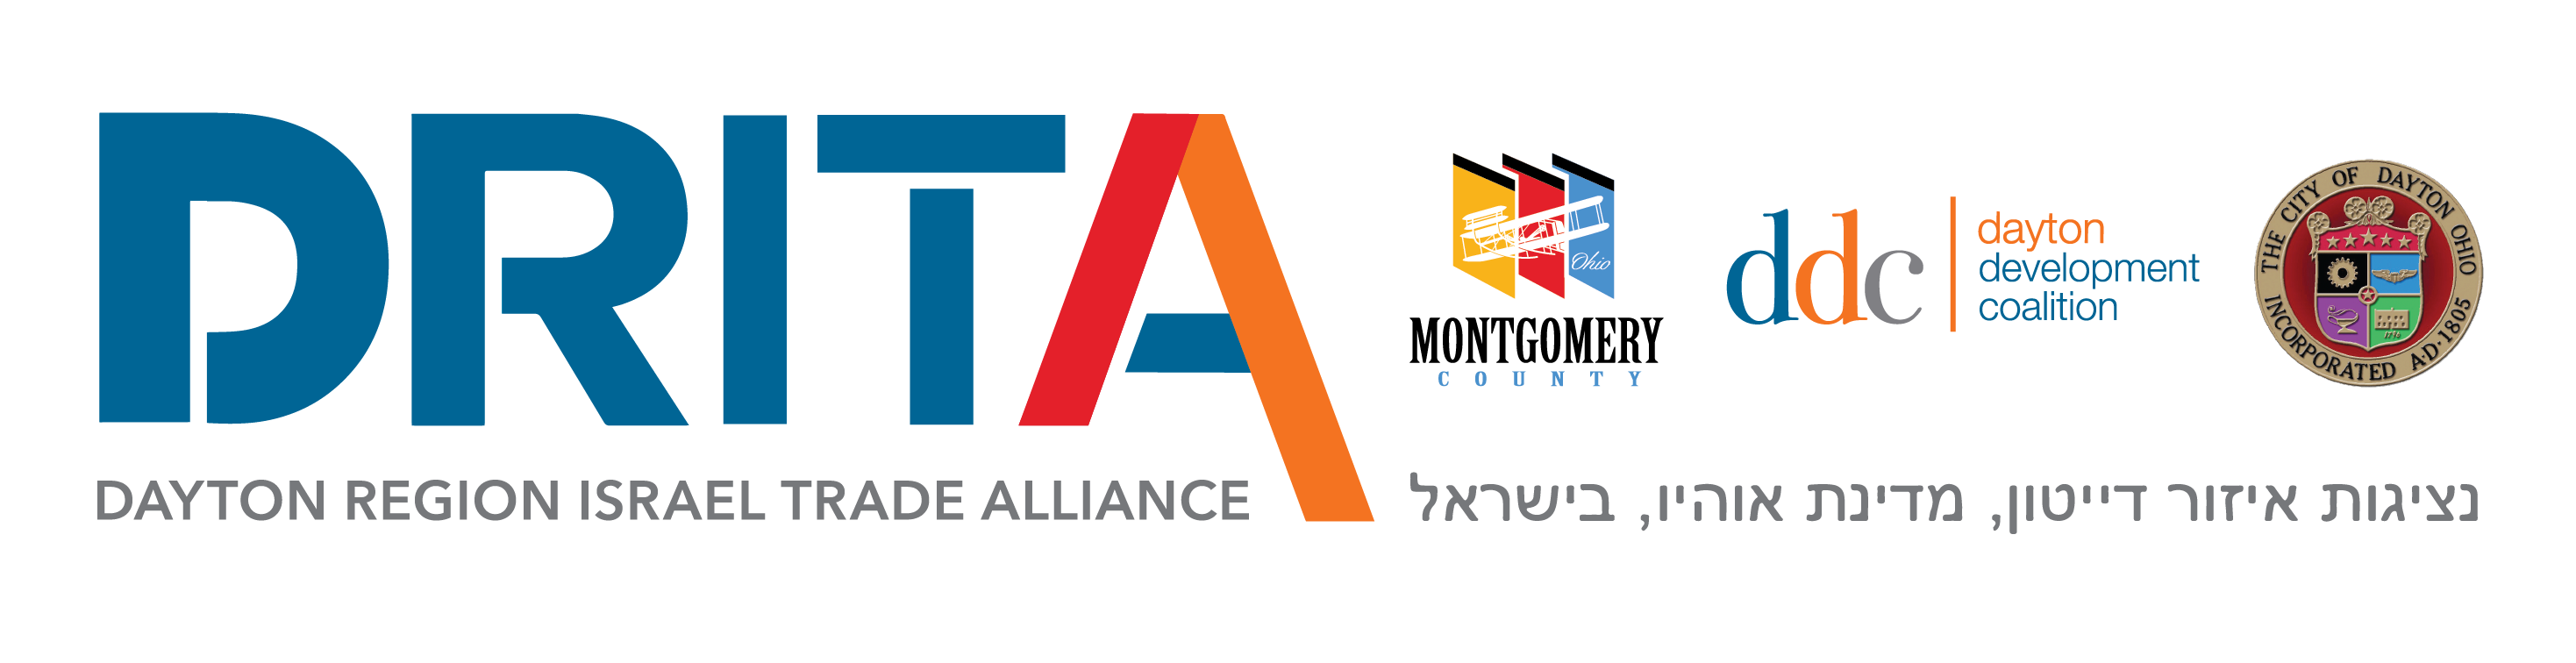 dayton region israel trade alliance